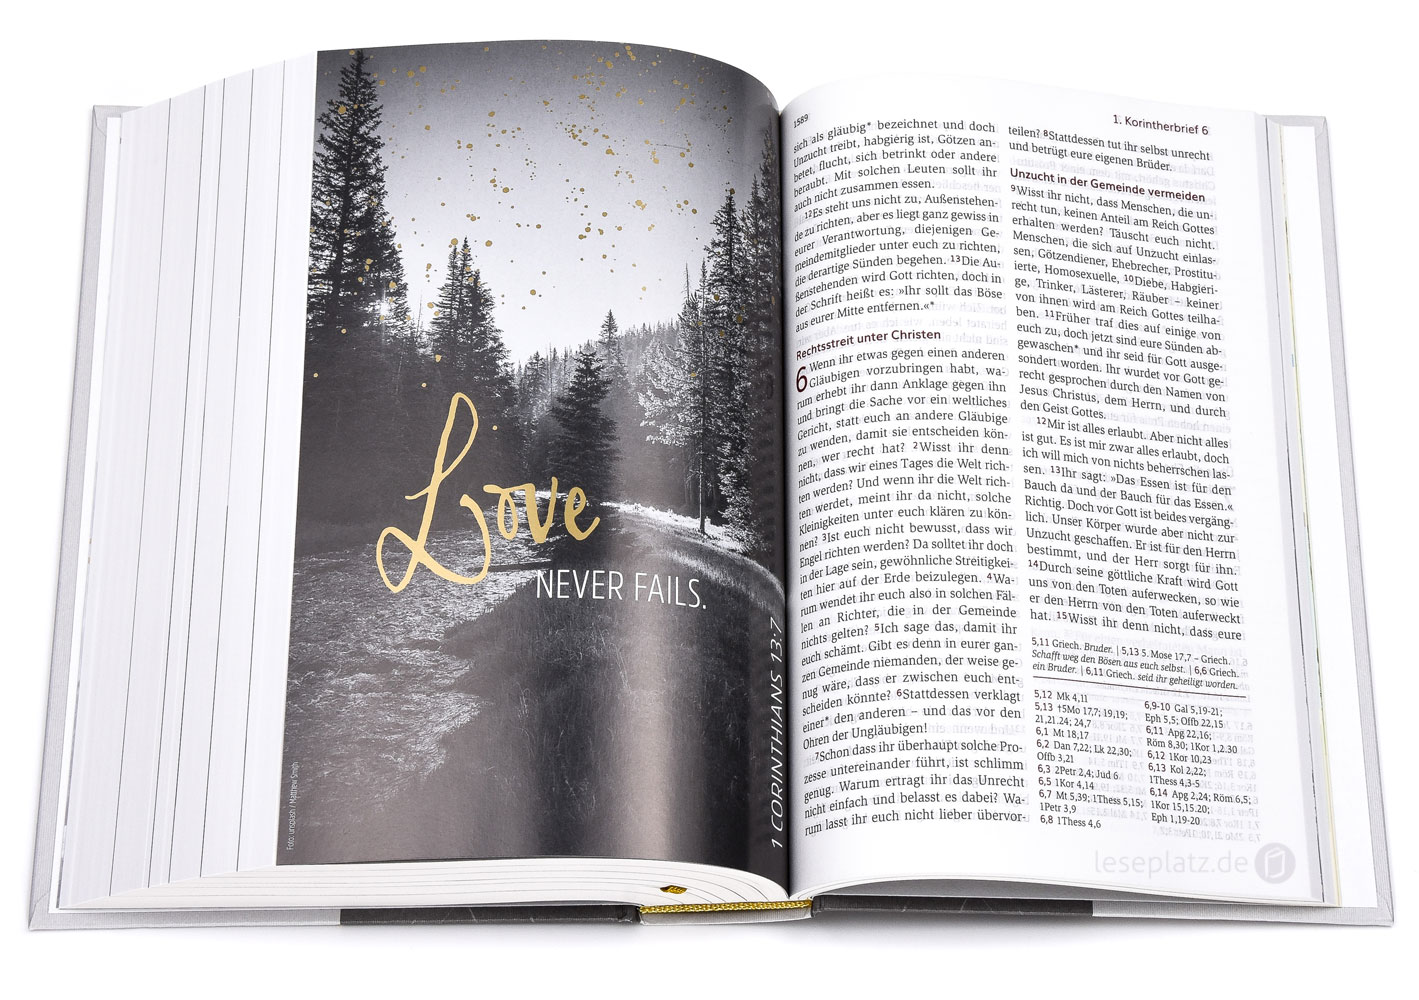 Neues Leben. Die Bibel - Standardausgabe "Grace & Hope"